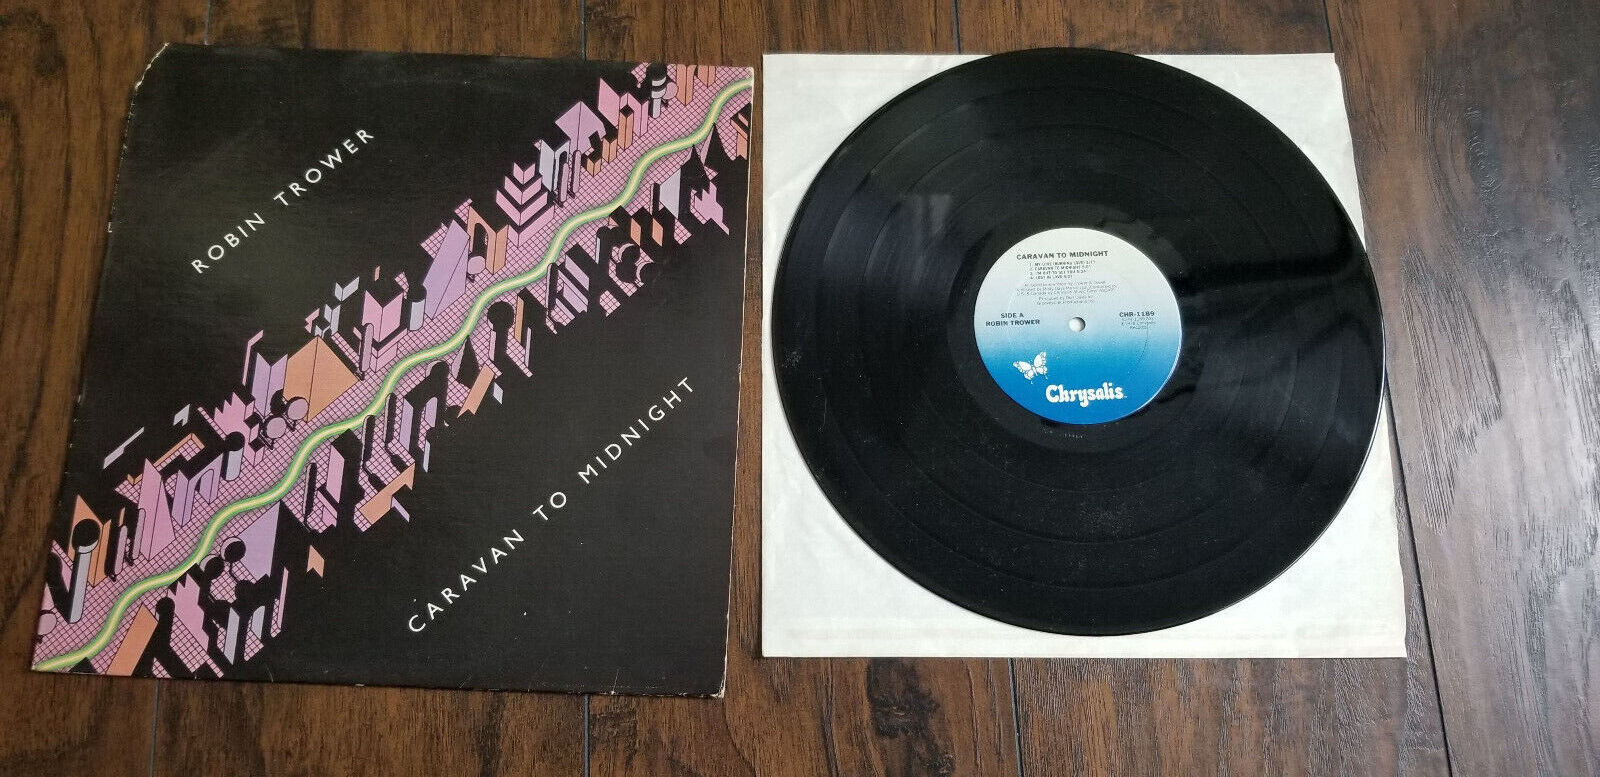 ROBIN TROWER "Caravan To Midnight" LP 1978 Chrysalis CHR-1189 NM 25z